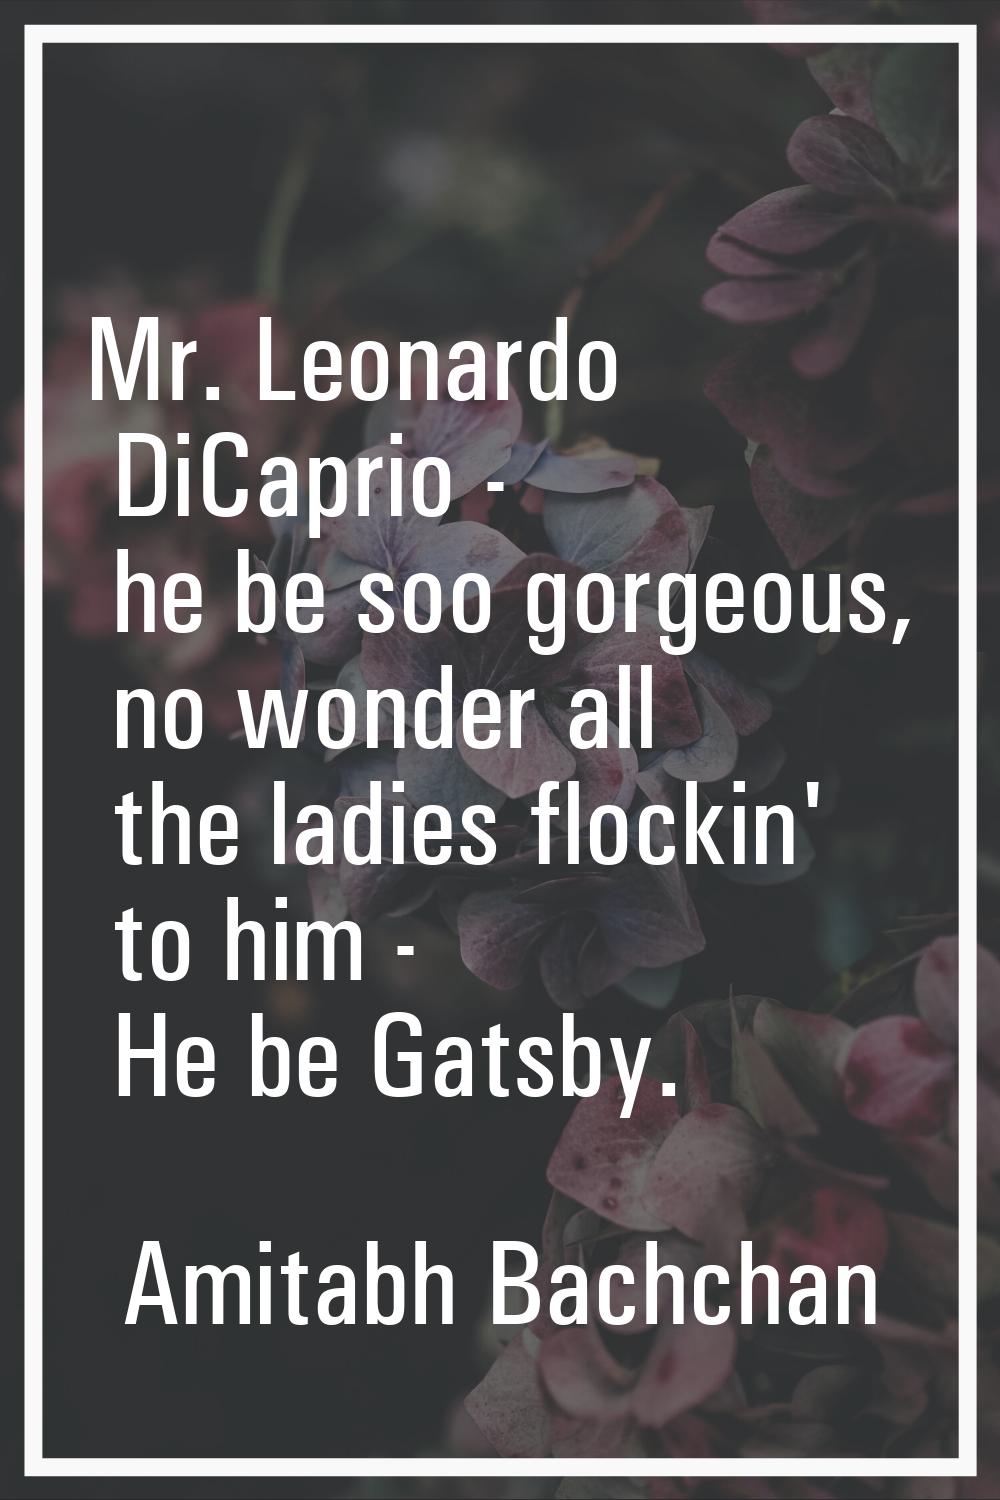 Mr. Leonardo DiCaprio - he be soo gorgeous, no wonder all the ladies flockin' to him - He be Gatsby